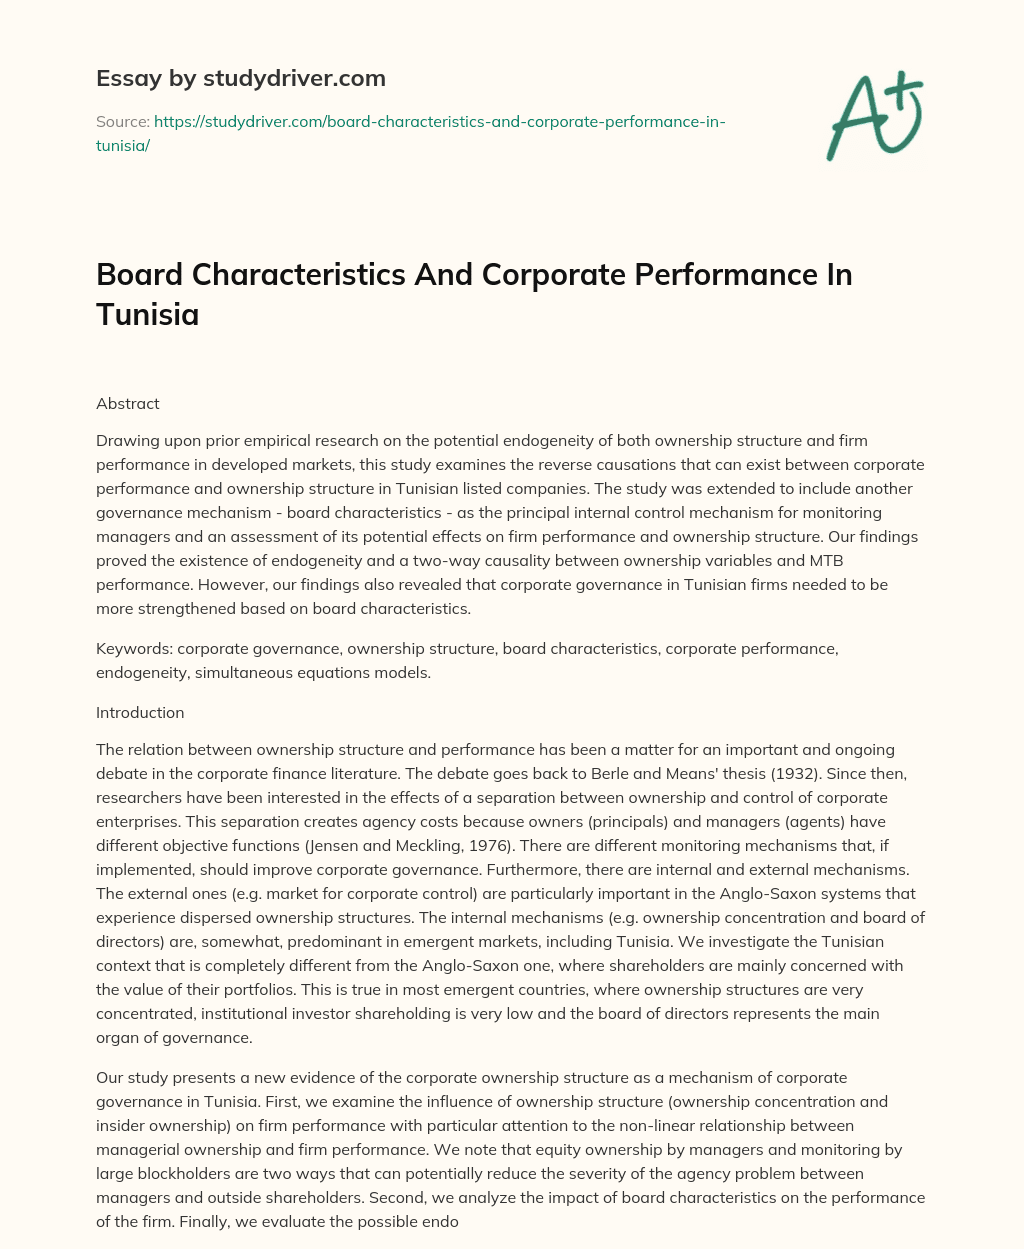 Board Characteristics and Corporate Performance in Tunisia essay